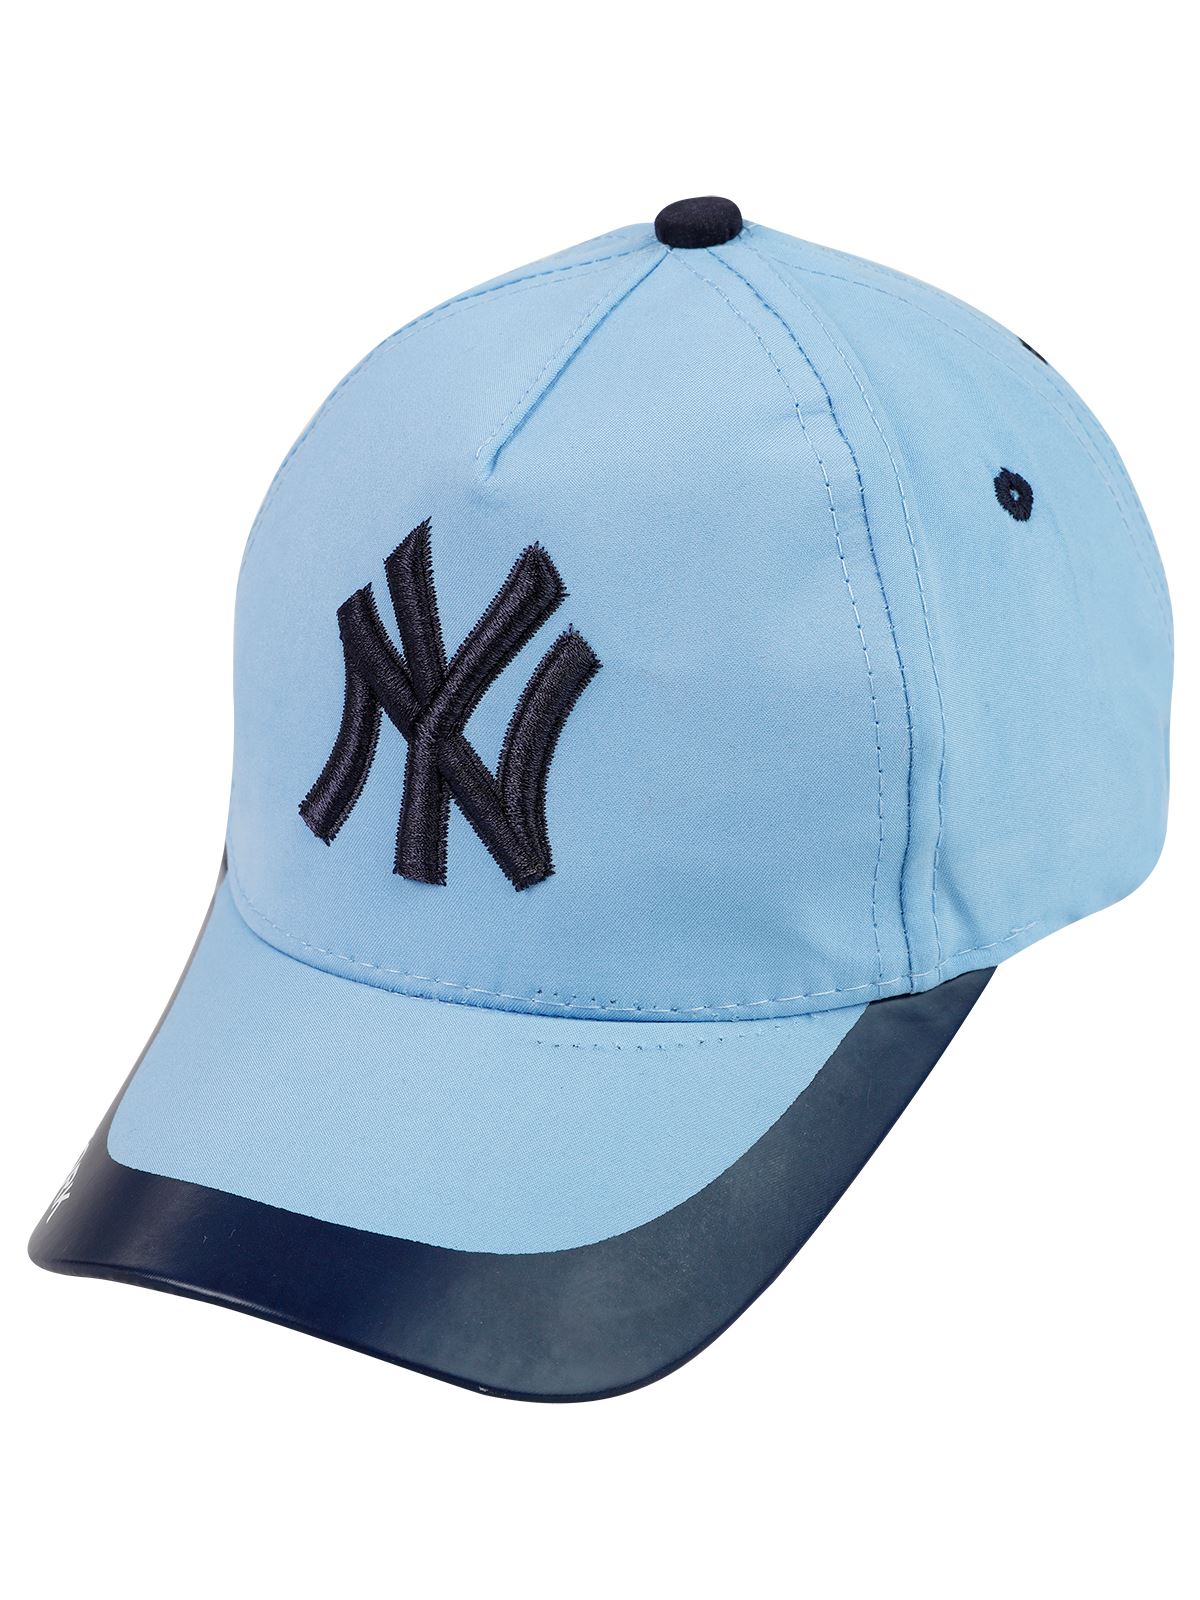 Civil Boys Erkek Çocuk Kep Şapka 2-5 Yaş Mavi